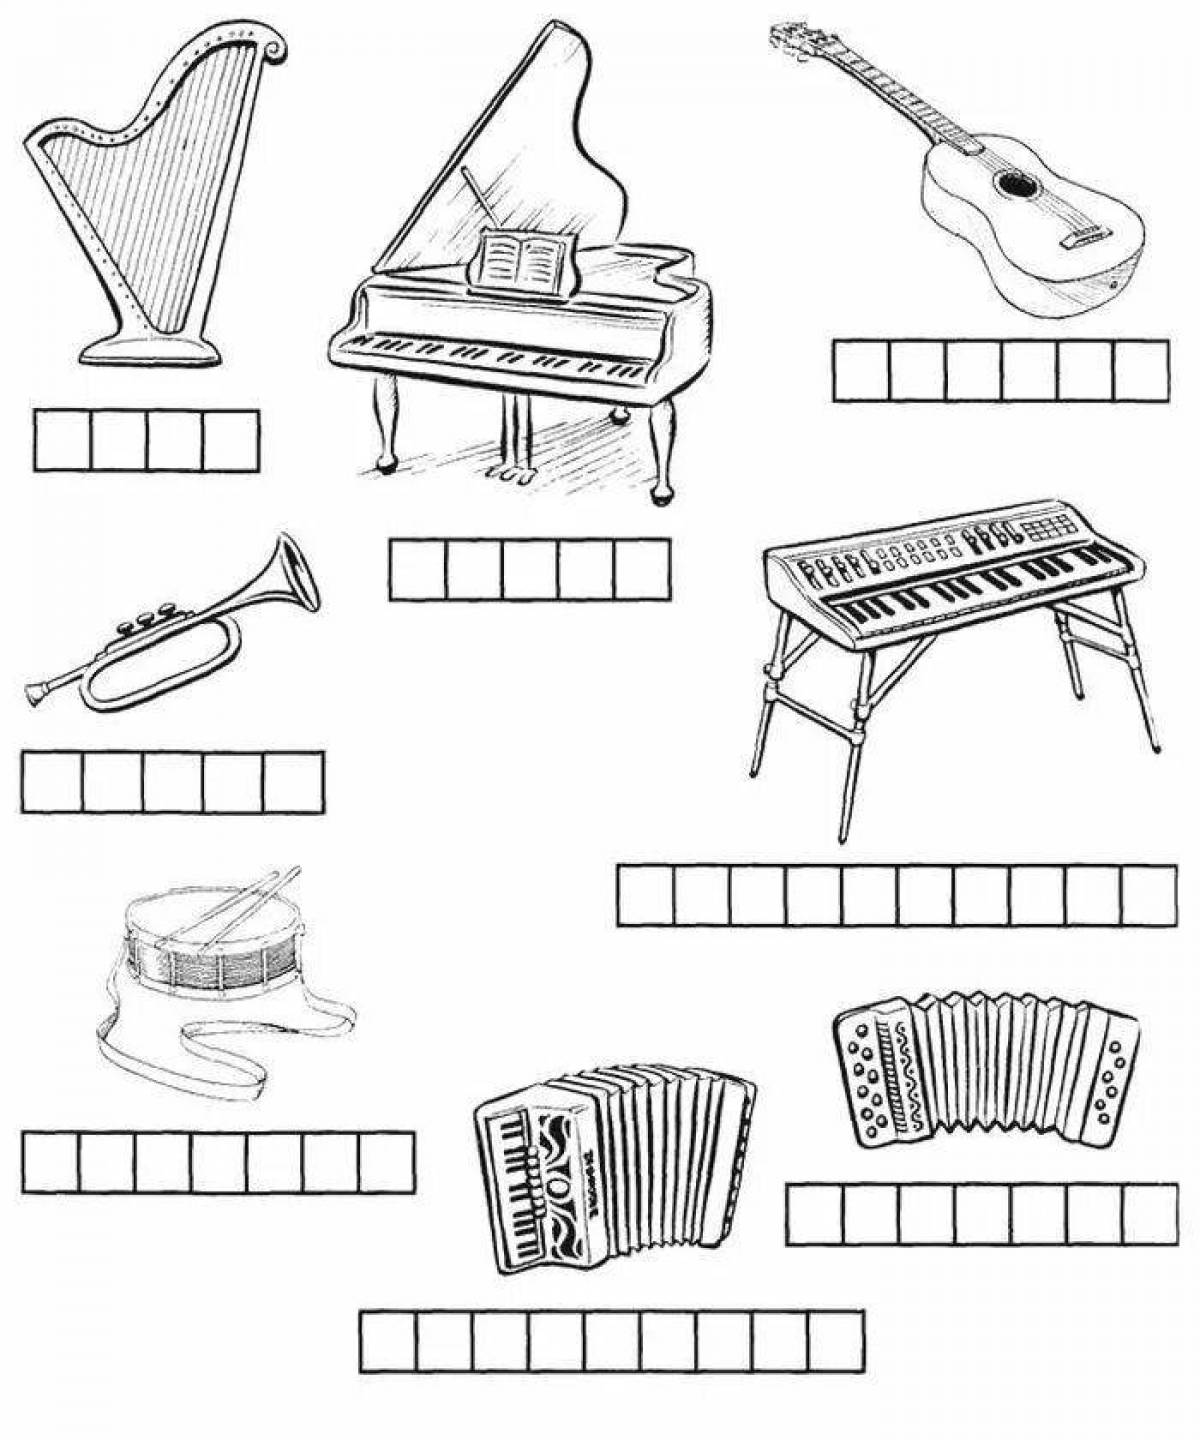 Musical instruments 1 class #1